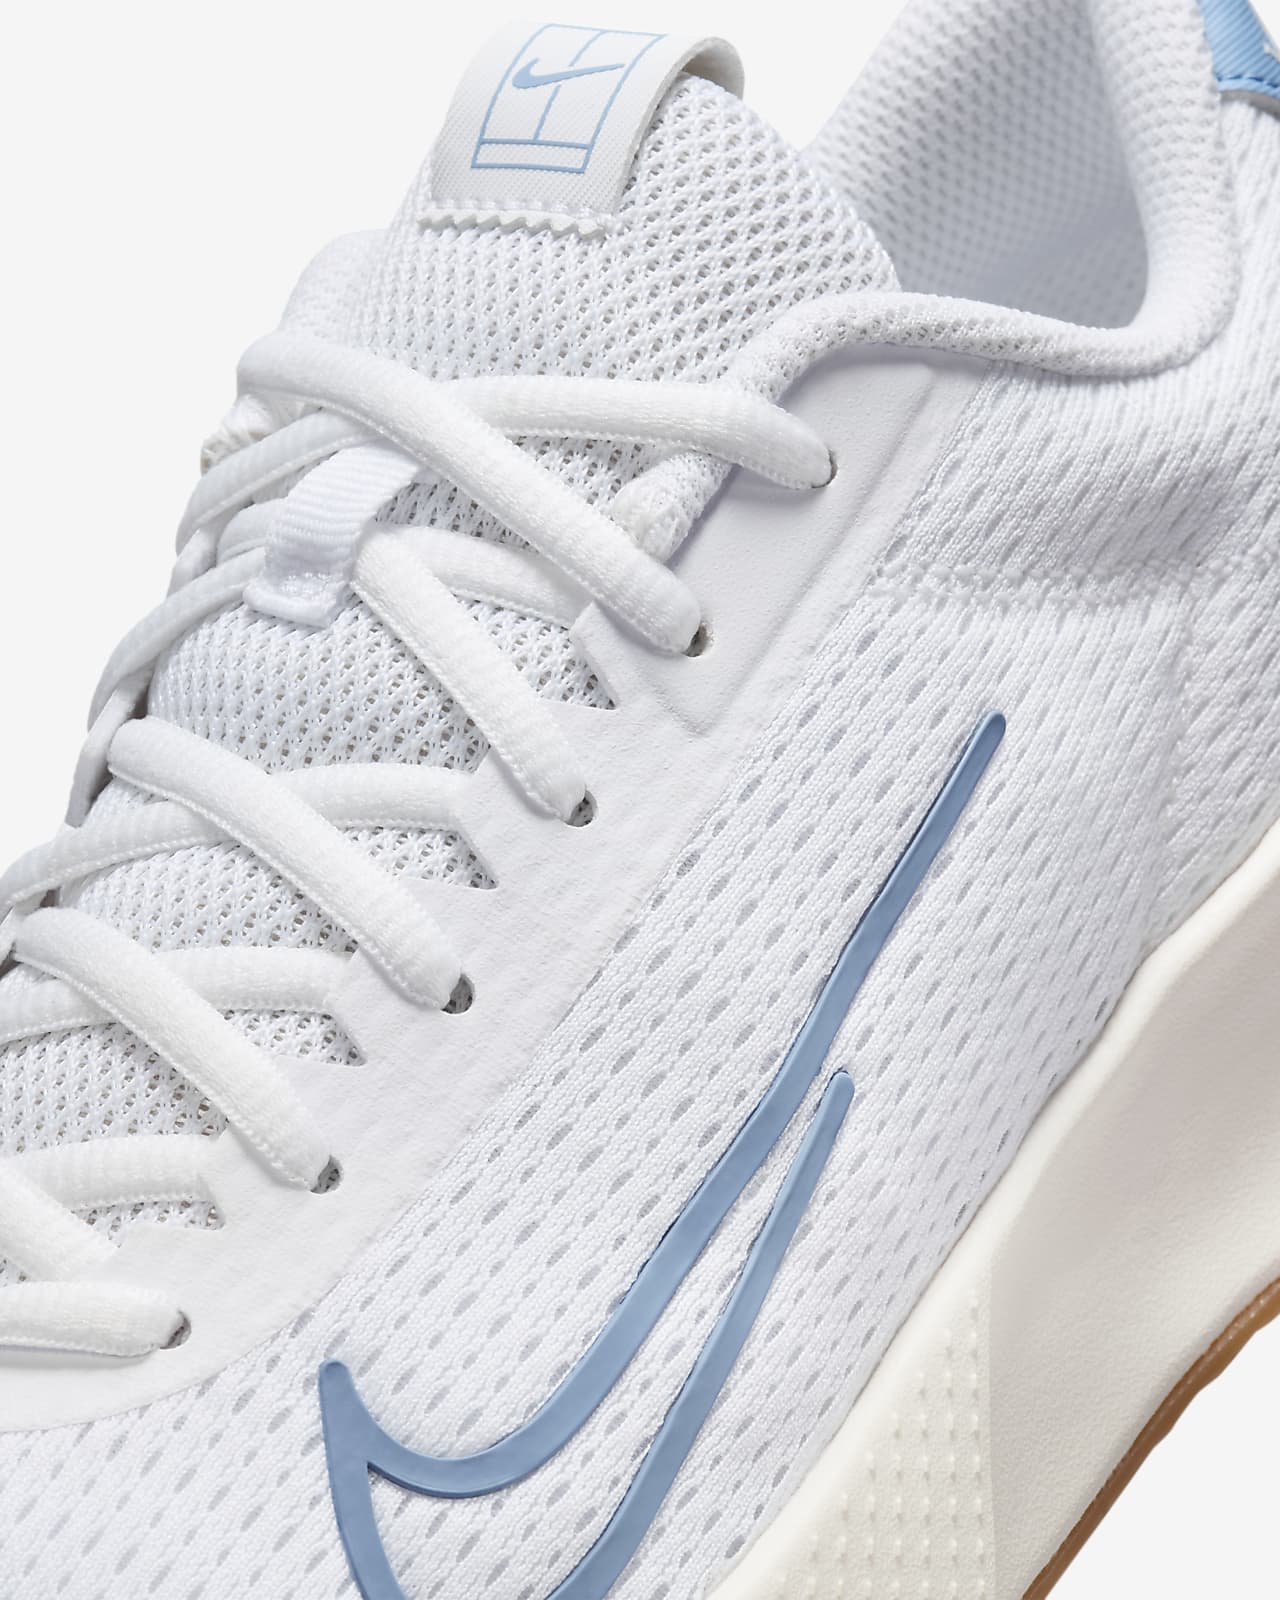 Nike Vapor Lite 2 Women's Tennis Shoe (White/Metalic Silver) 